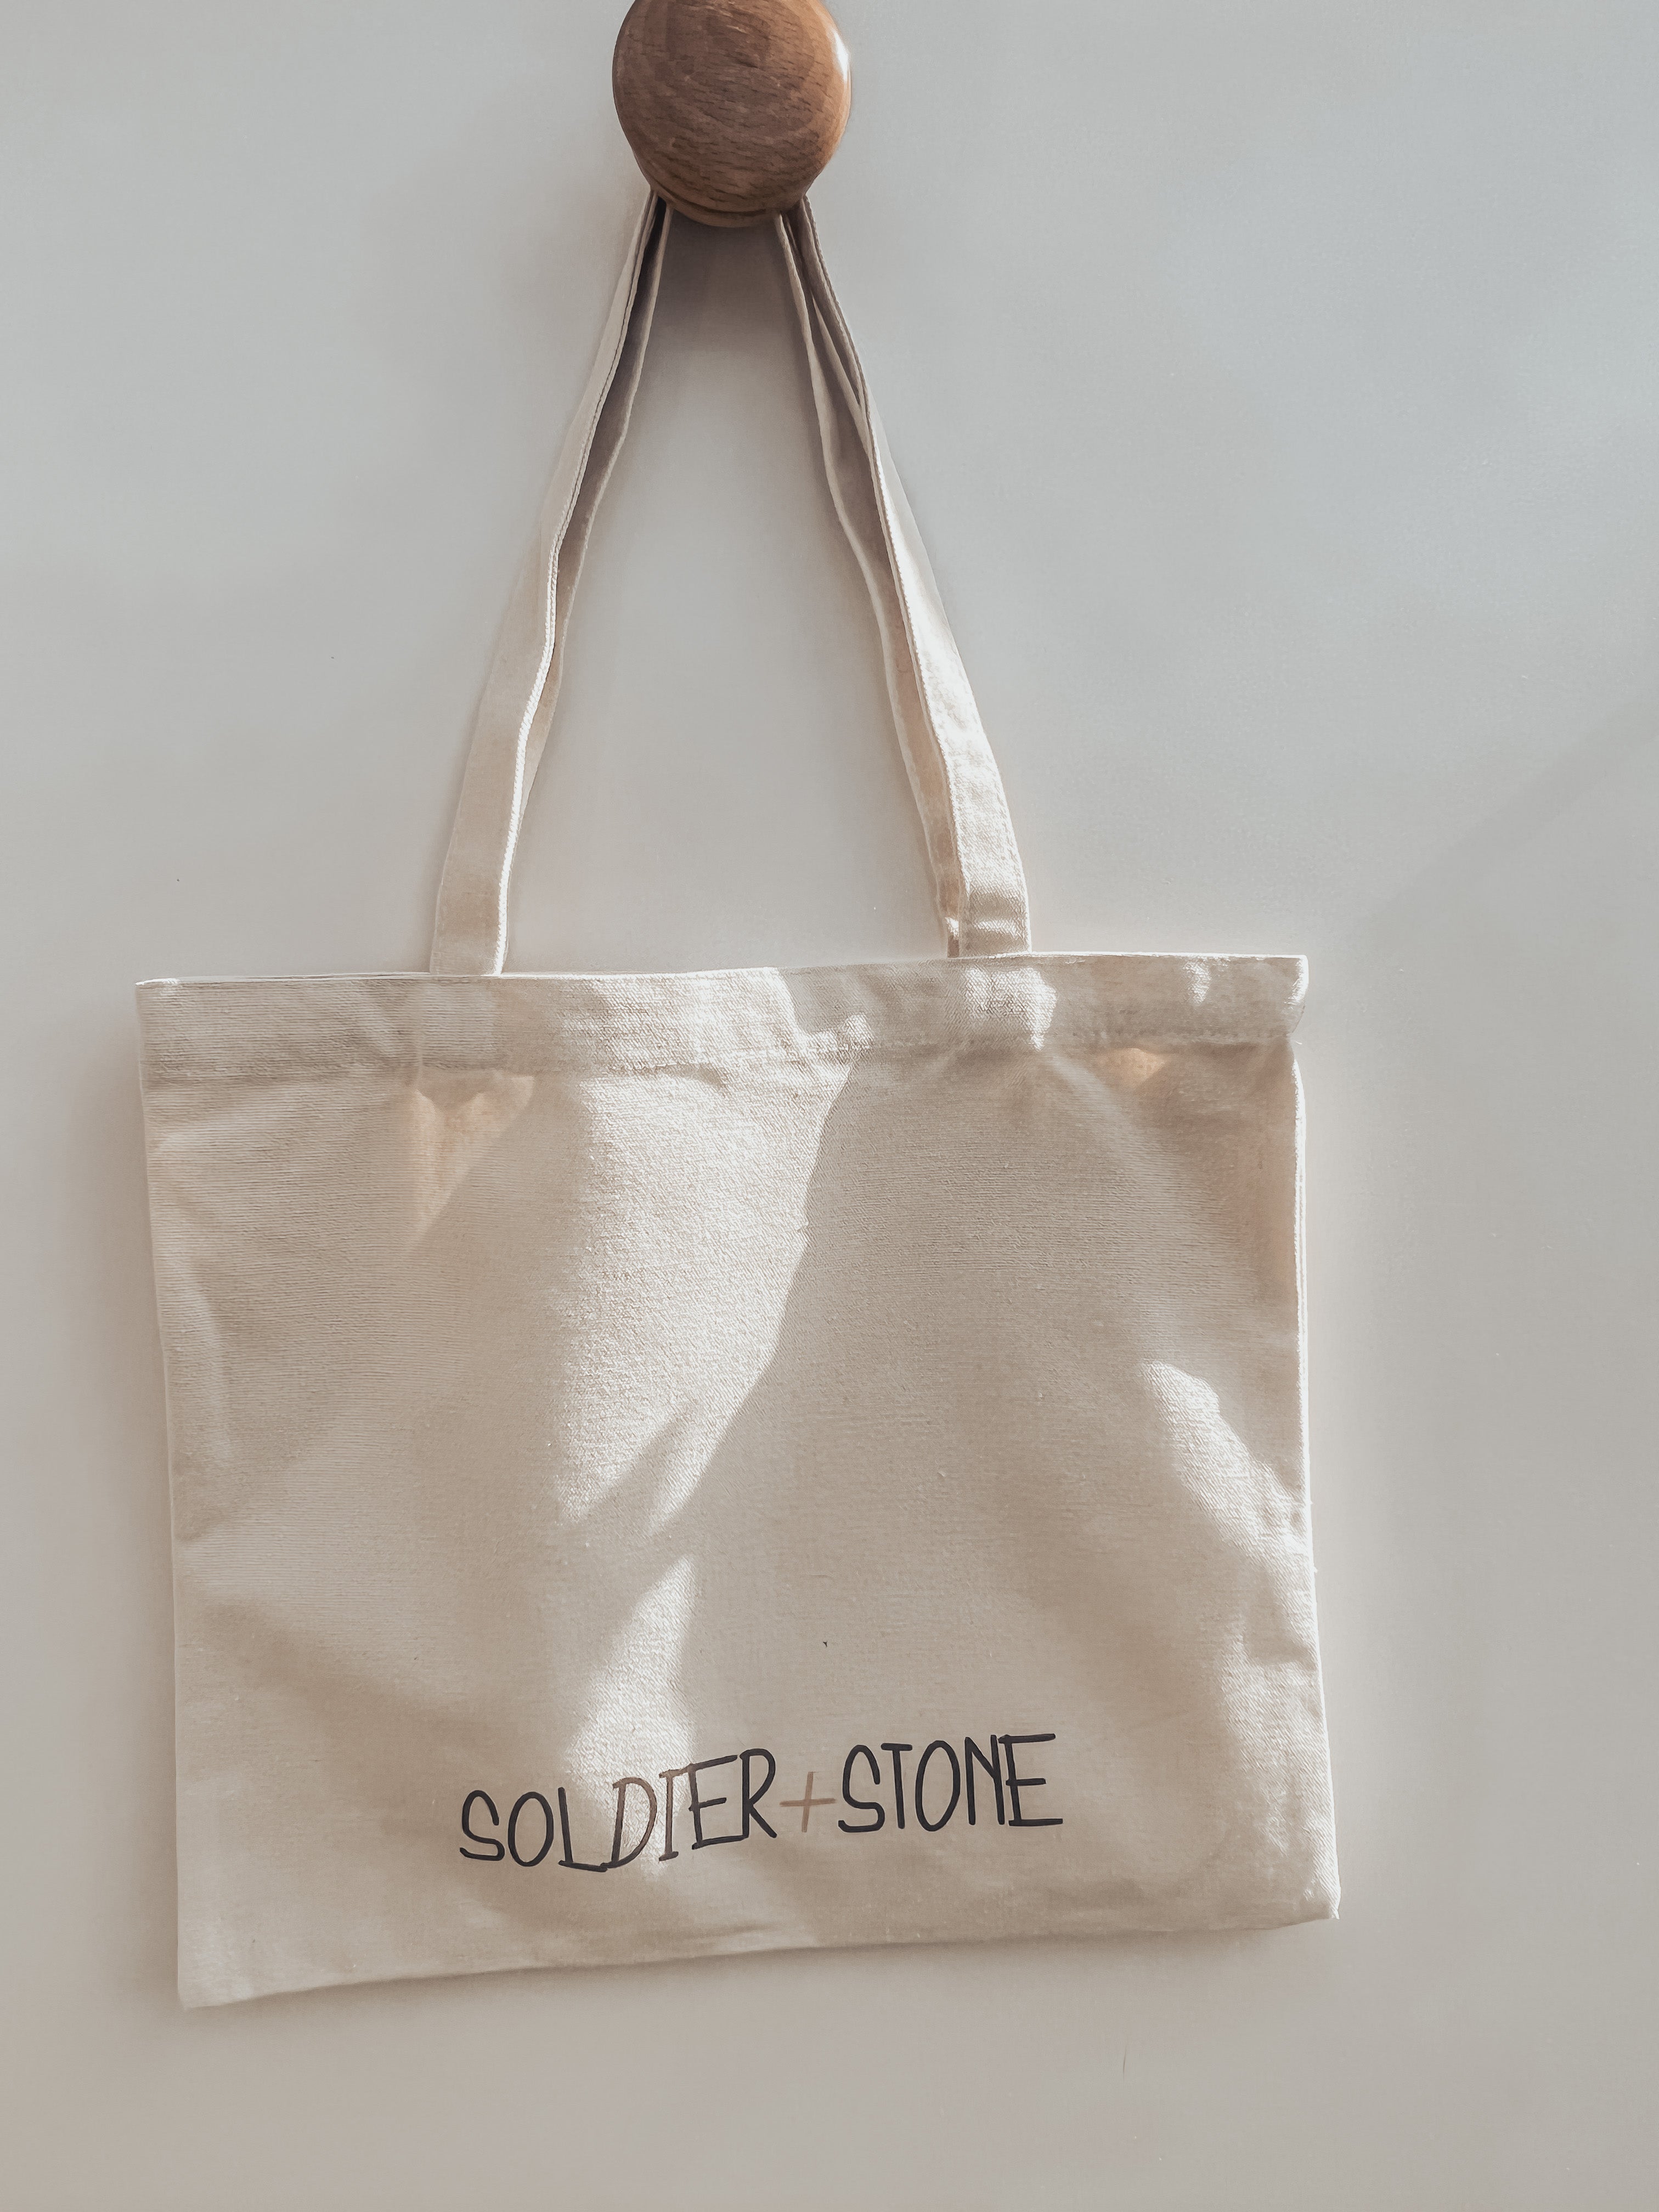 Soldier+Stone Canvas Bag